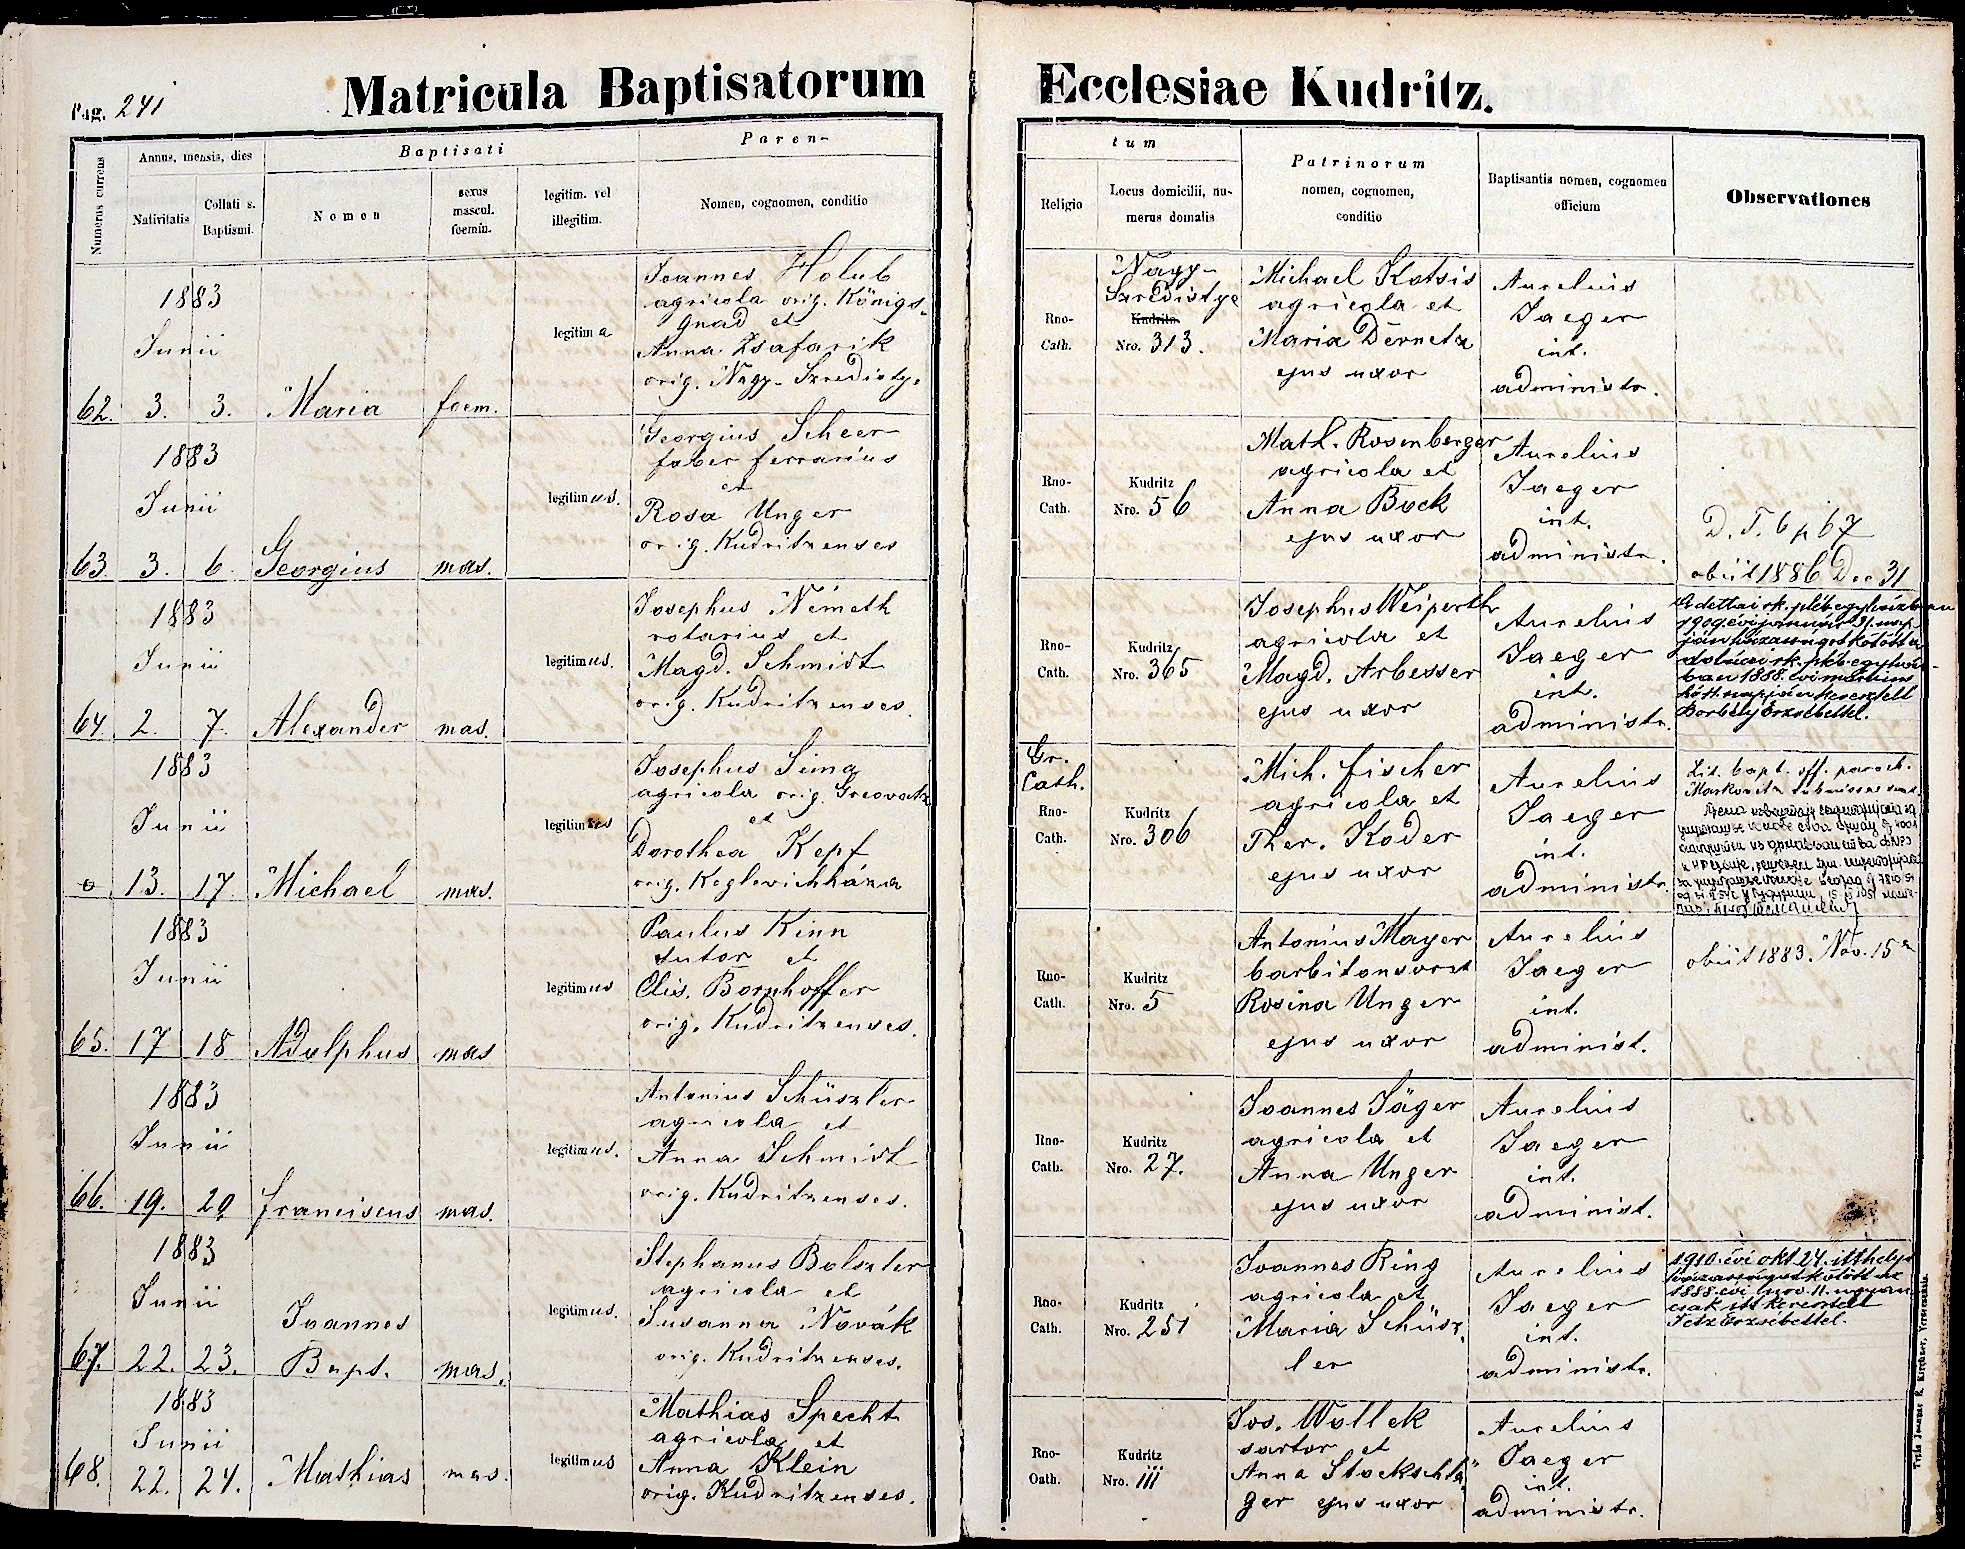 images/church_records/BIRTHS/1880-1883B/1883/241